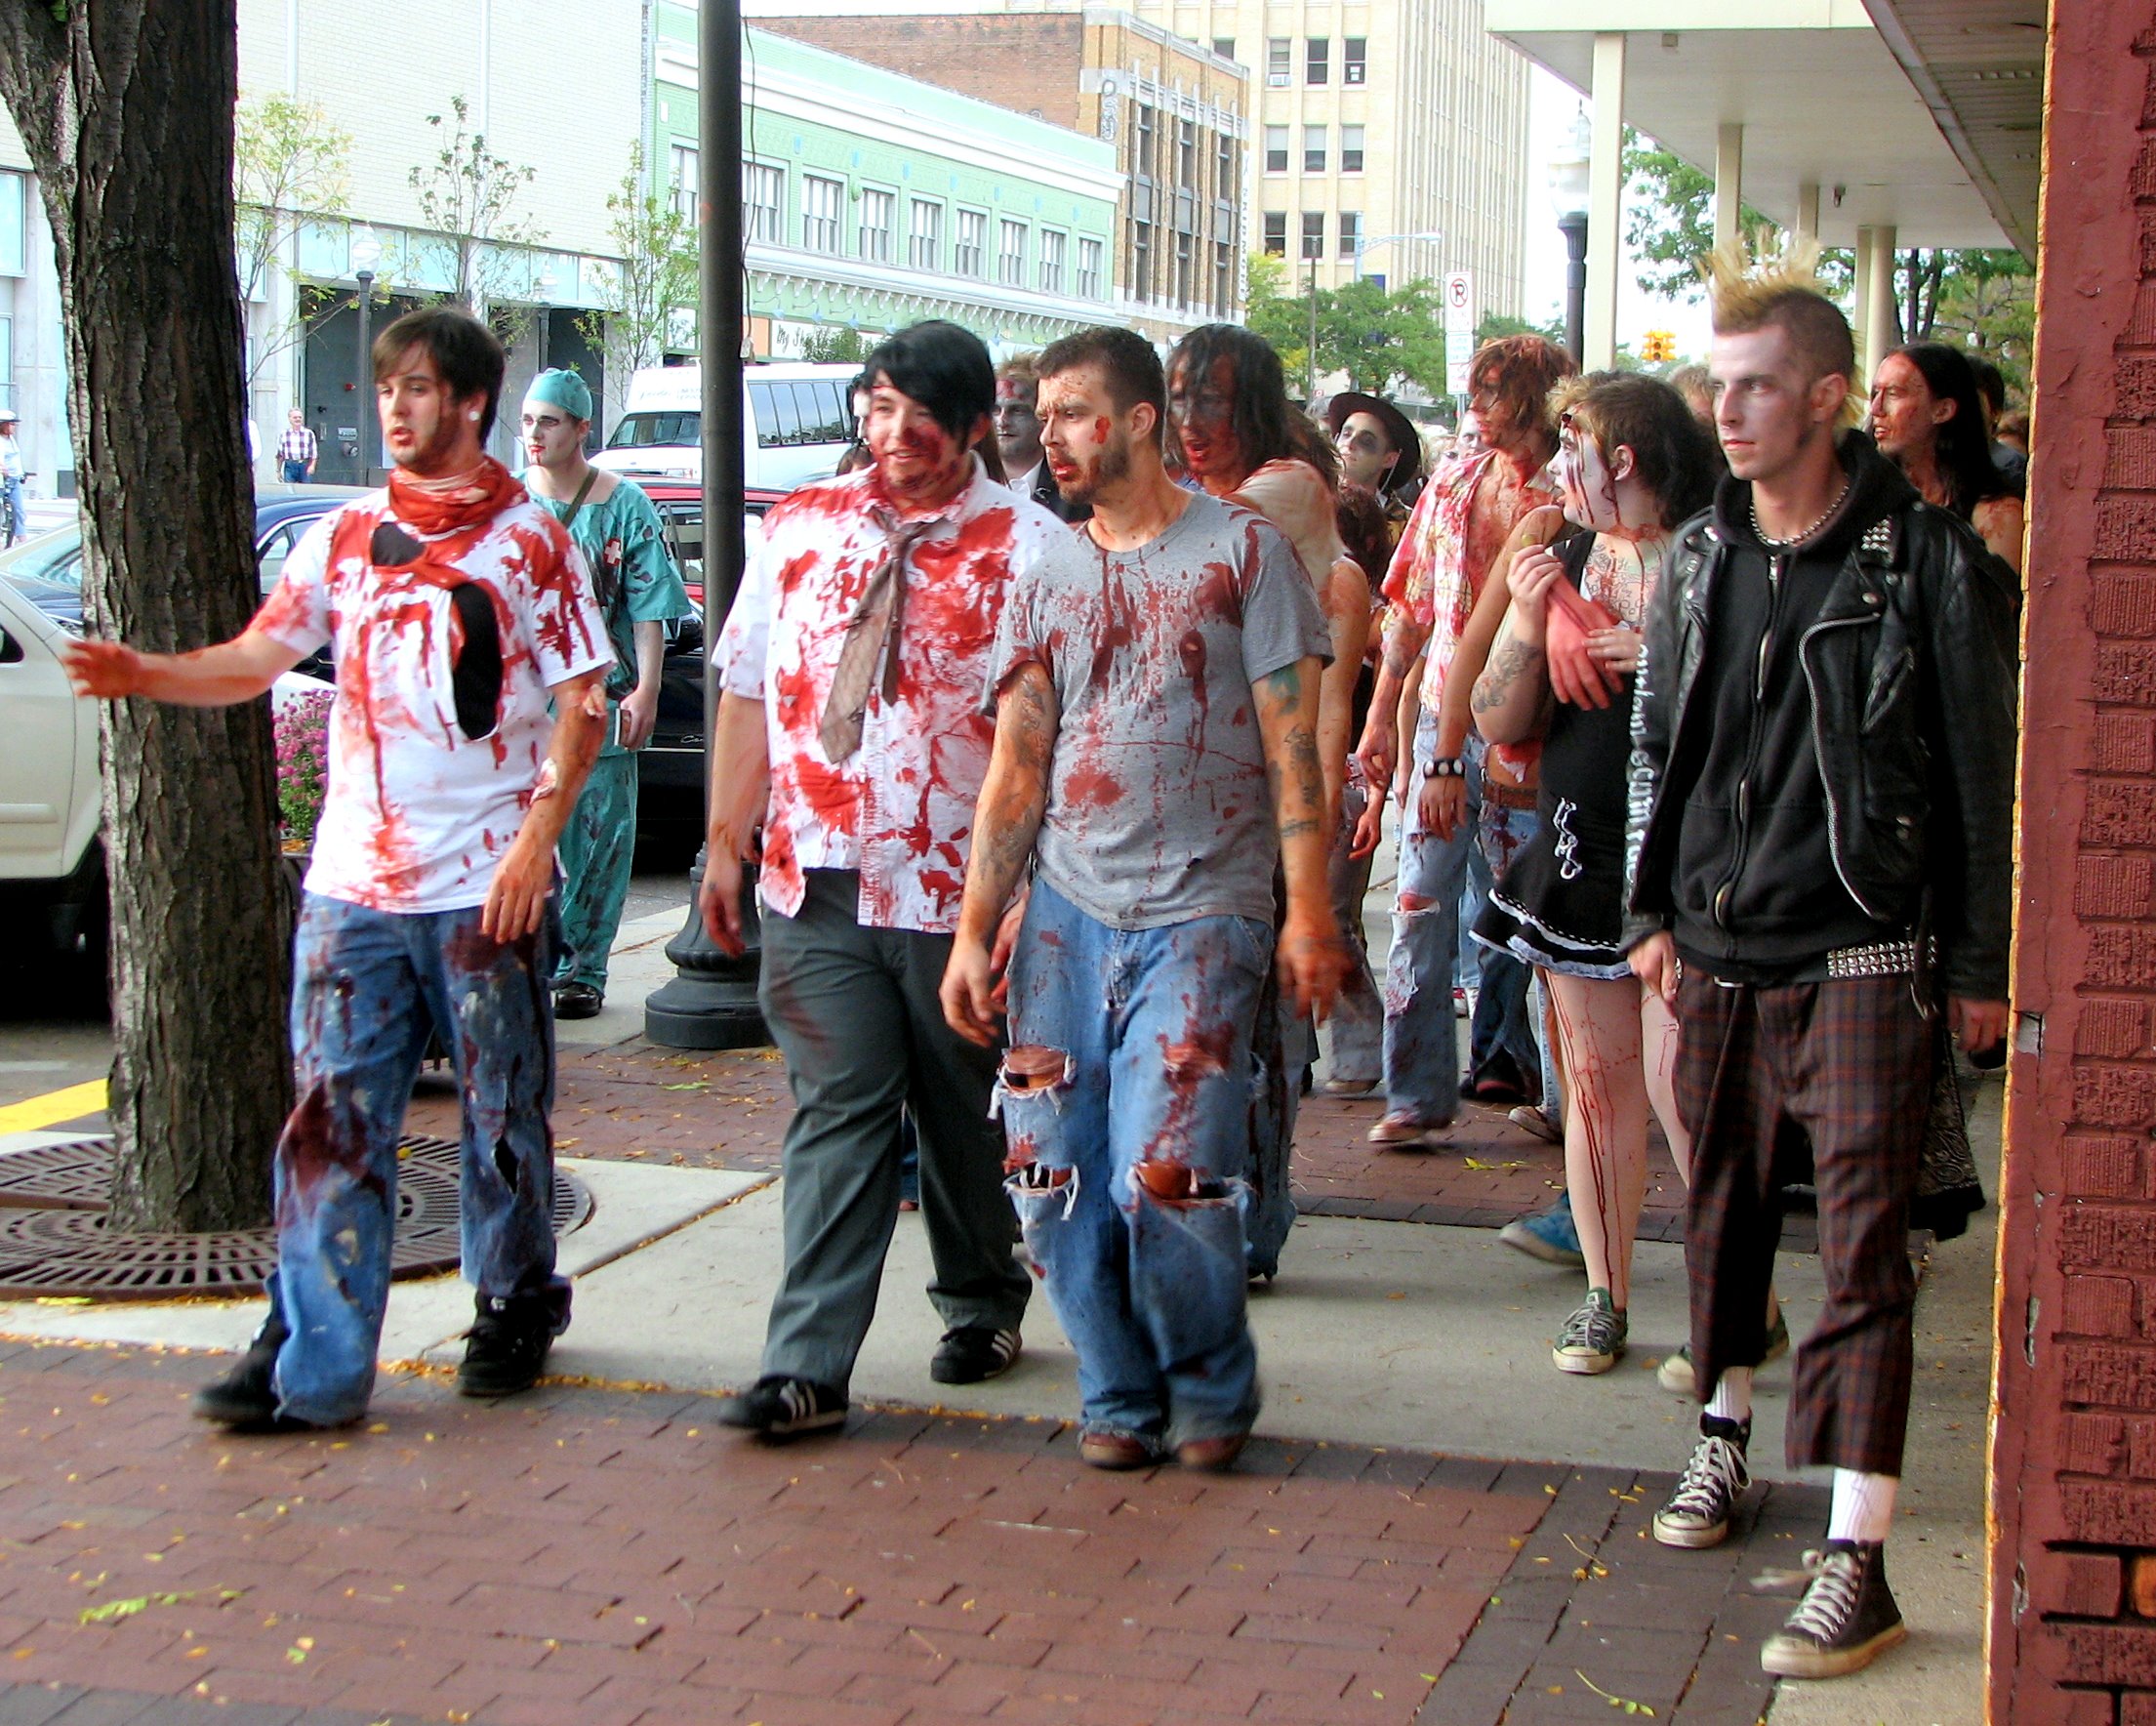 Zombie Horde Or Black Friday Mob?